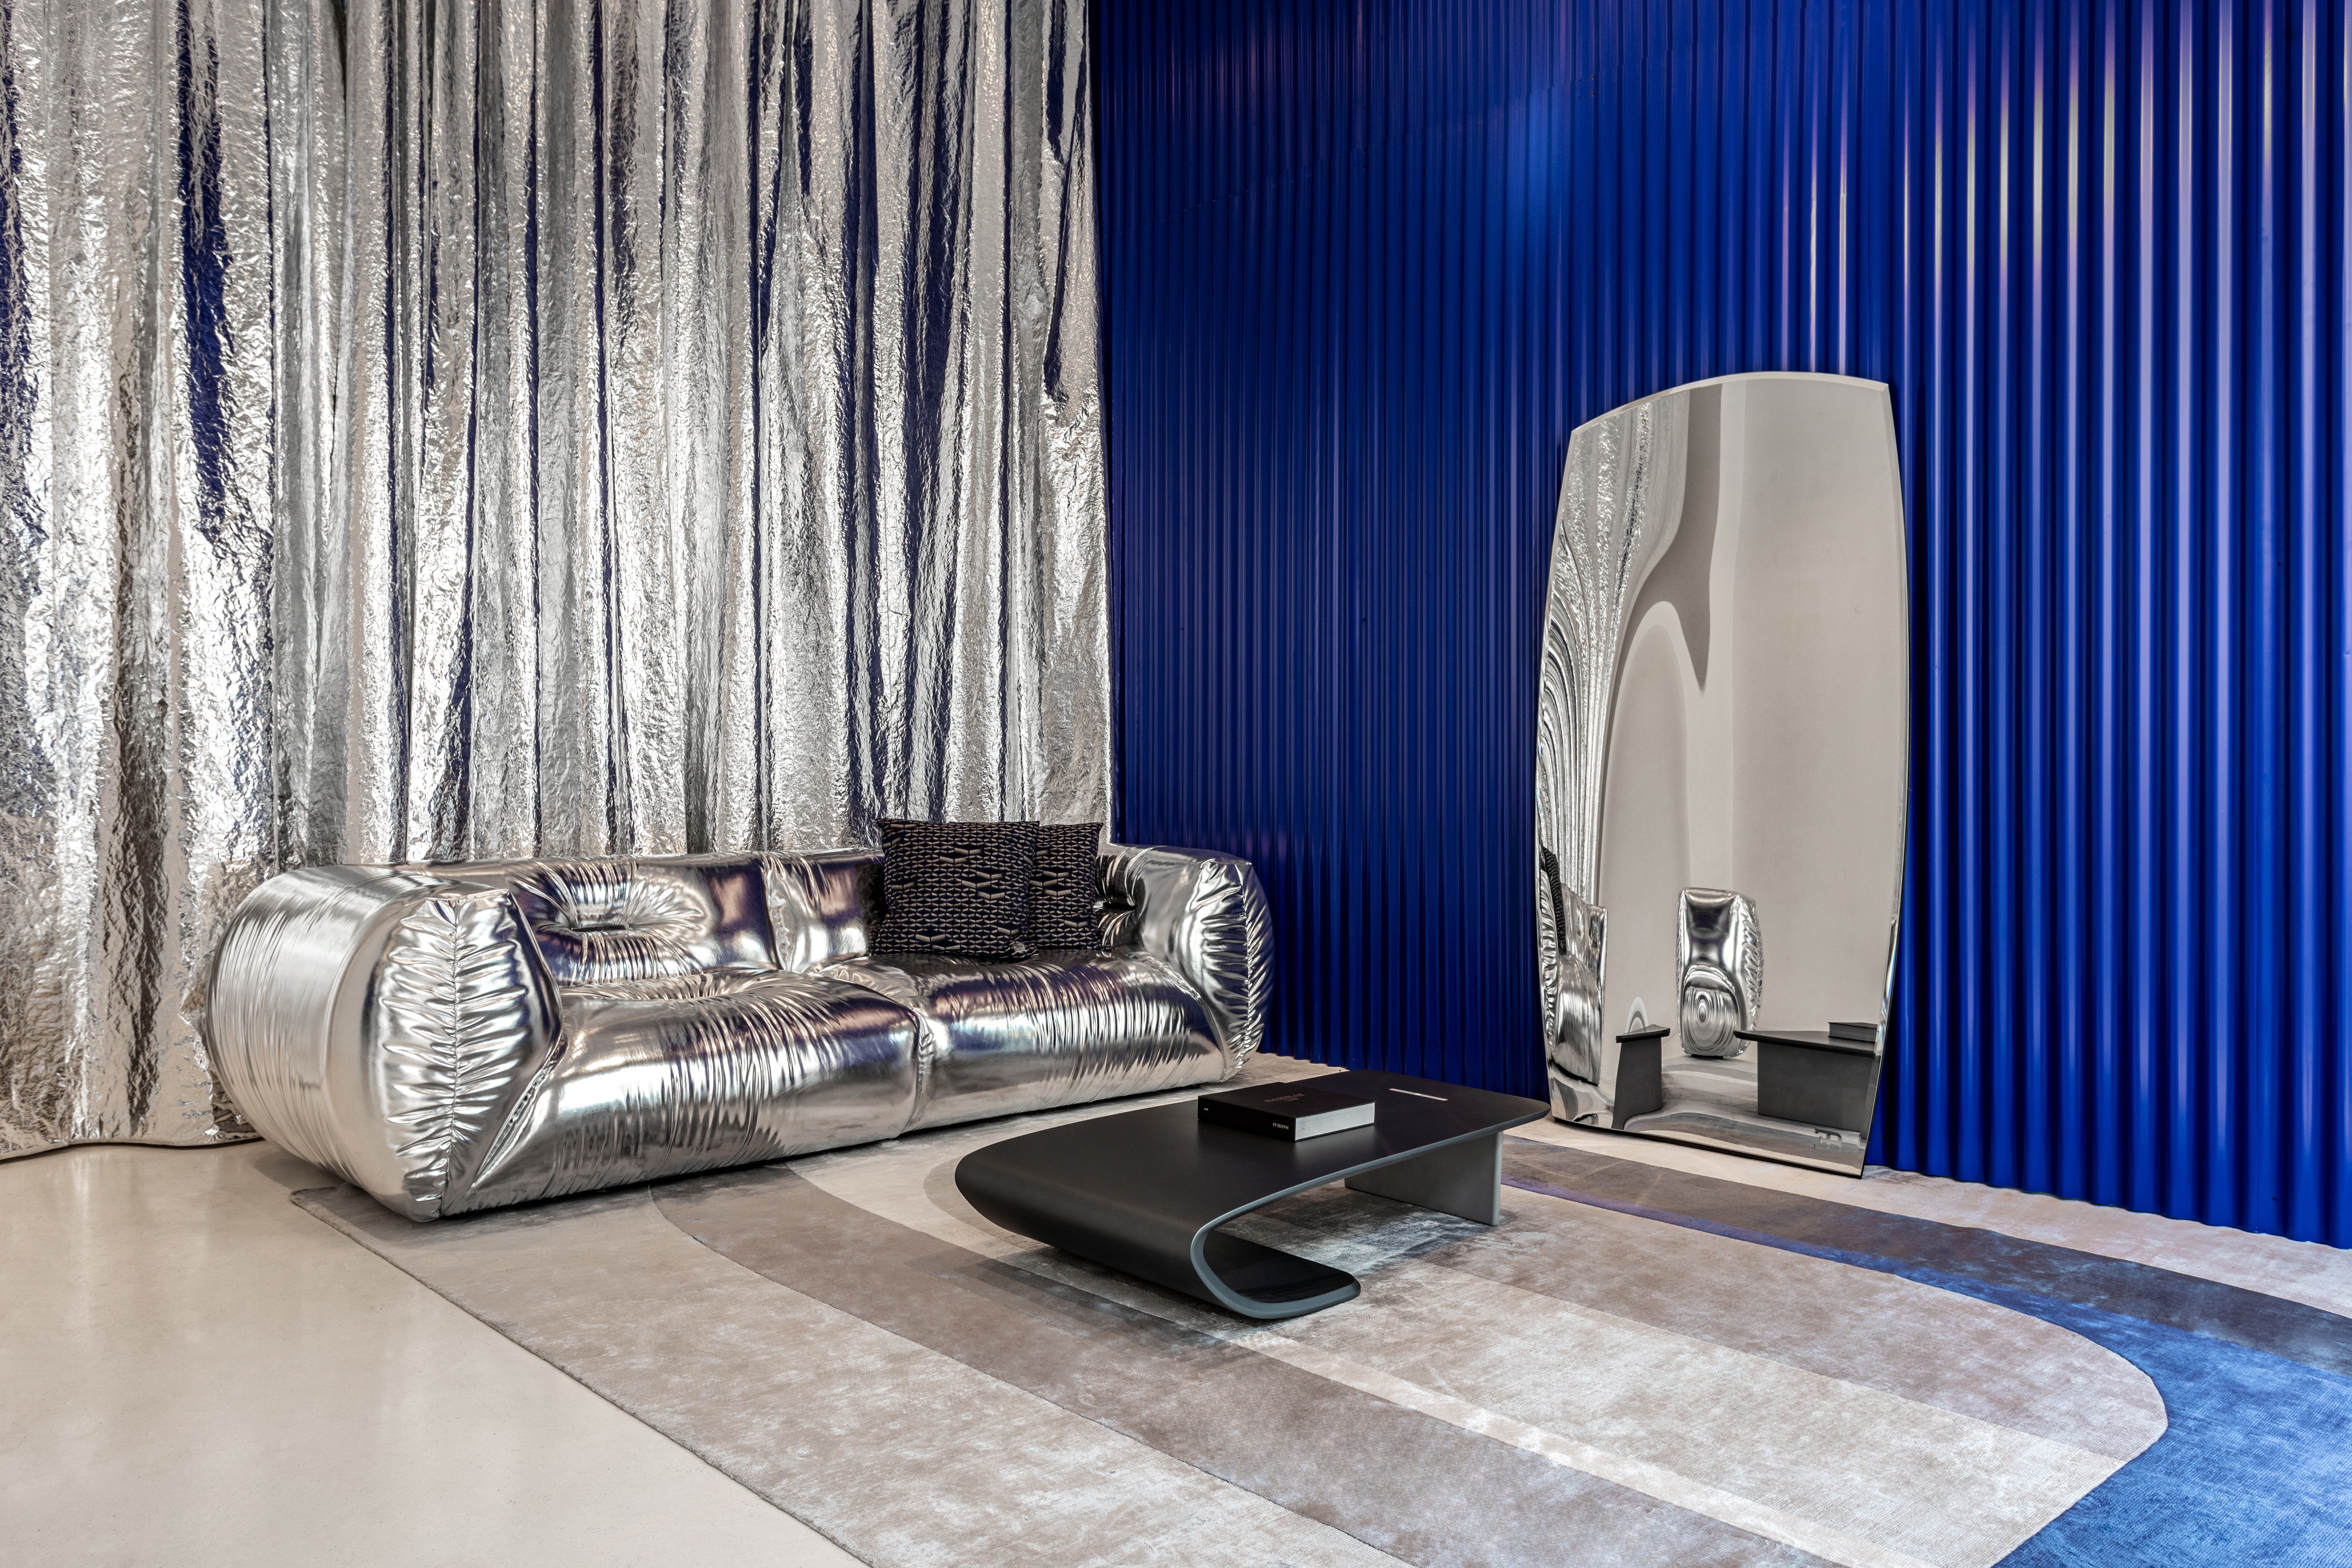 Bugatti furniture looks like it belongs in a NASA launch chamber – Gamereactor